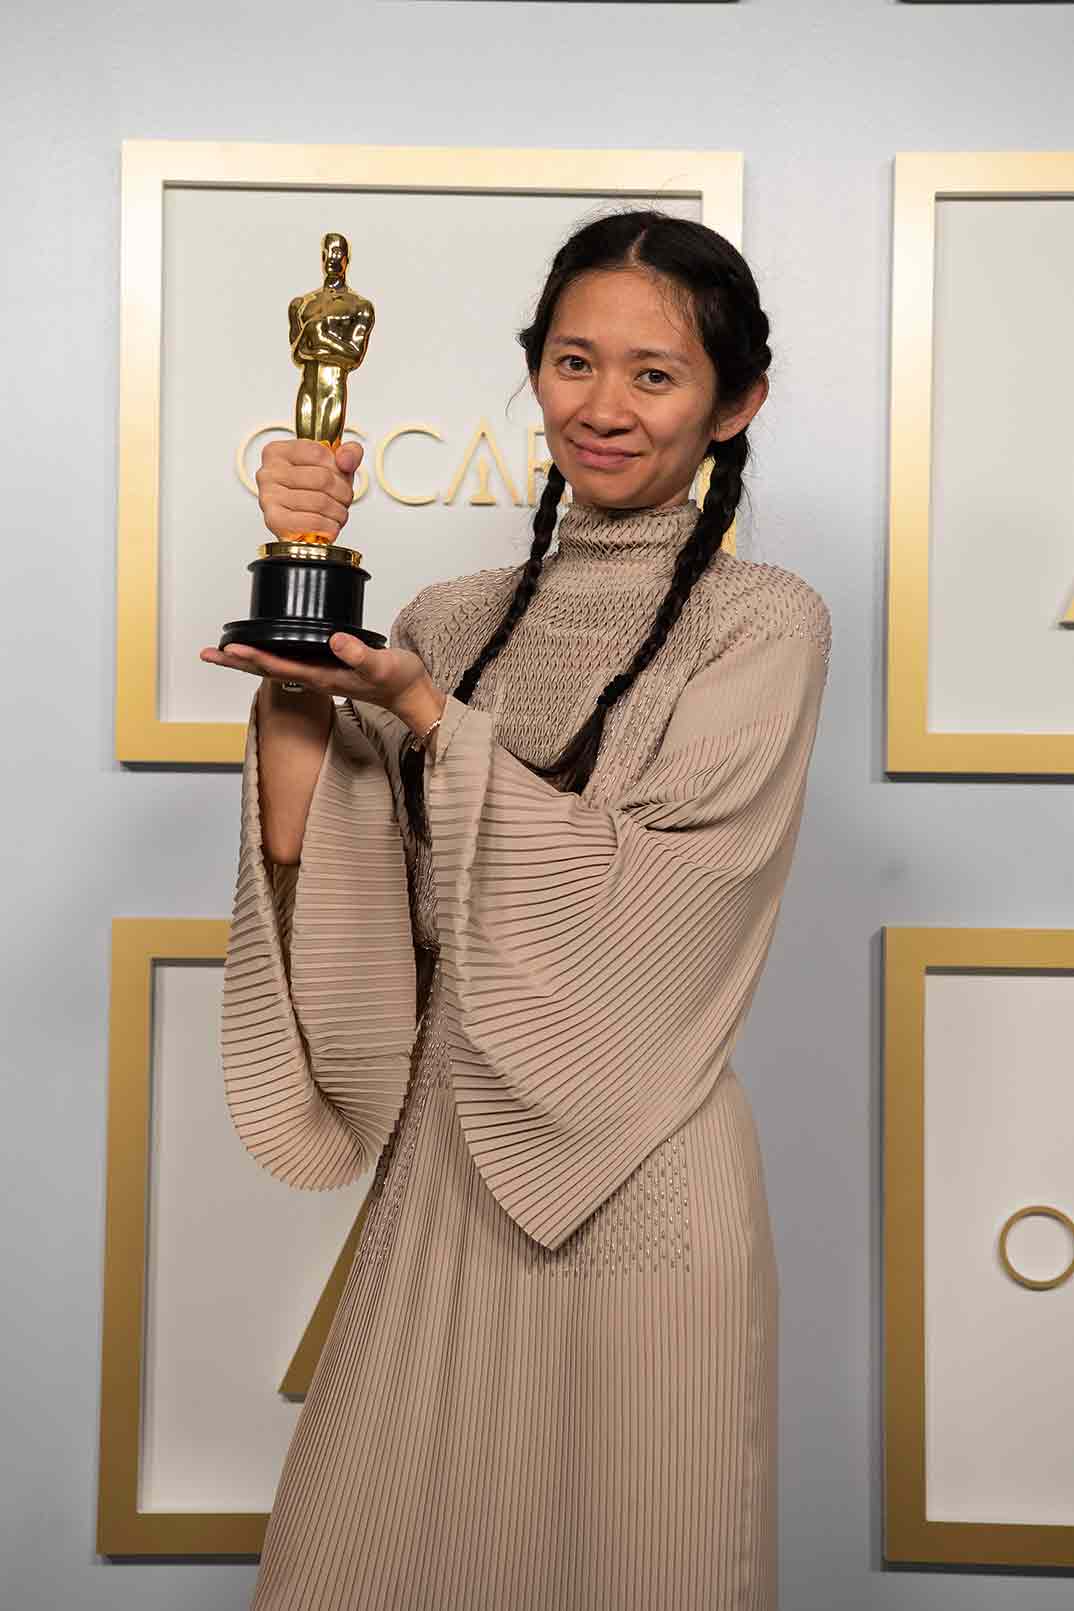 Chloé Zhao - Premios Oscar 2021 © Matt Petit / AMPAS